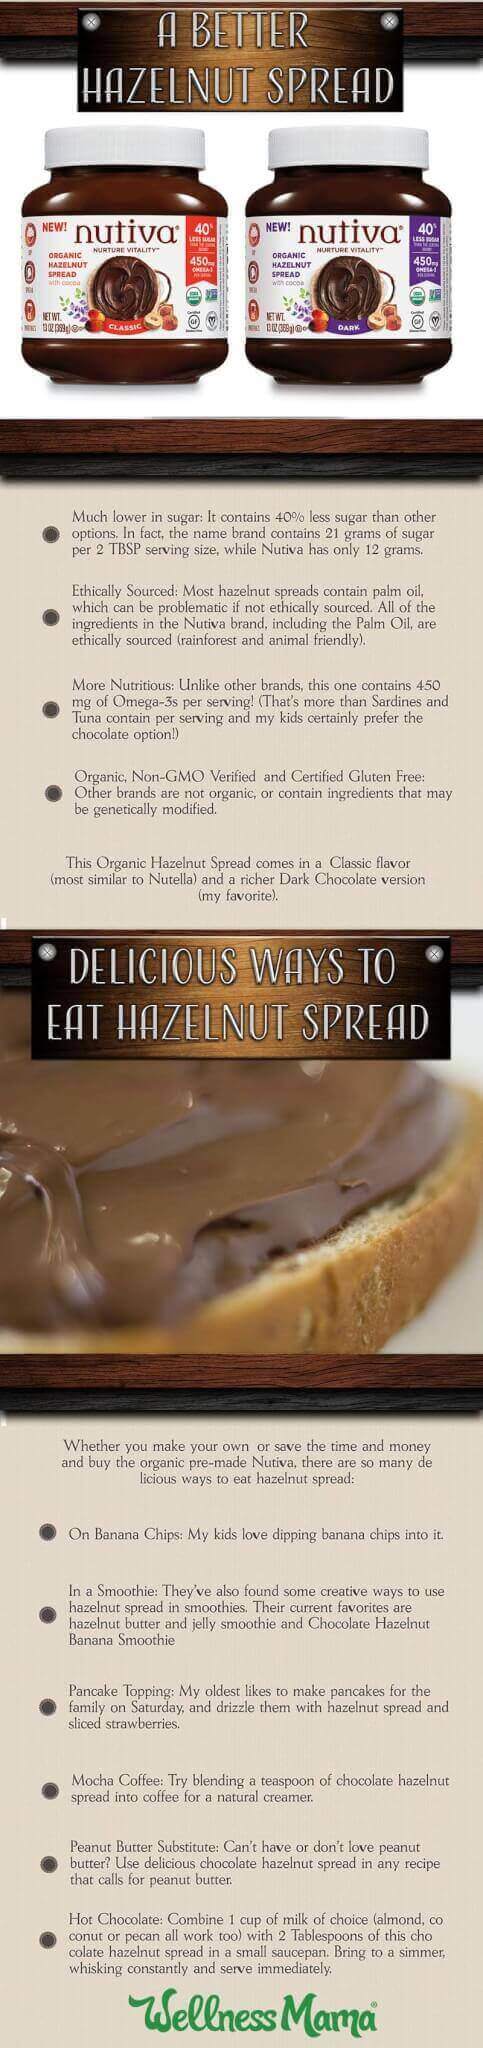 better-than-nutella-a-healthier-hazelnut-spread